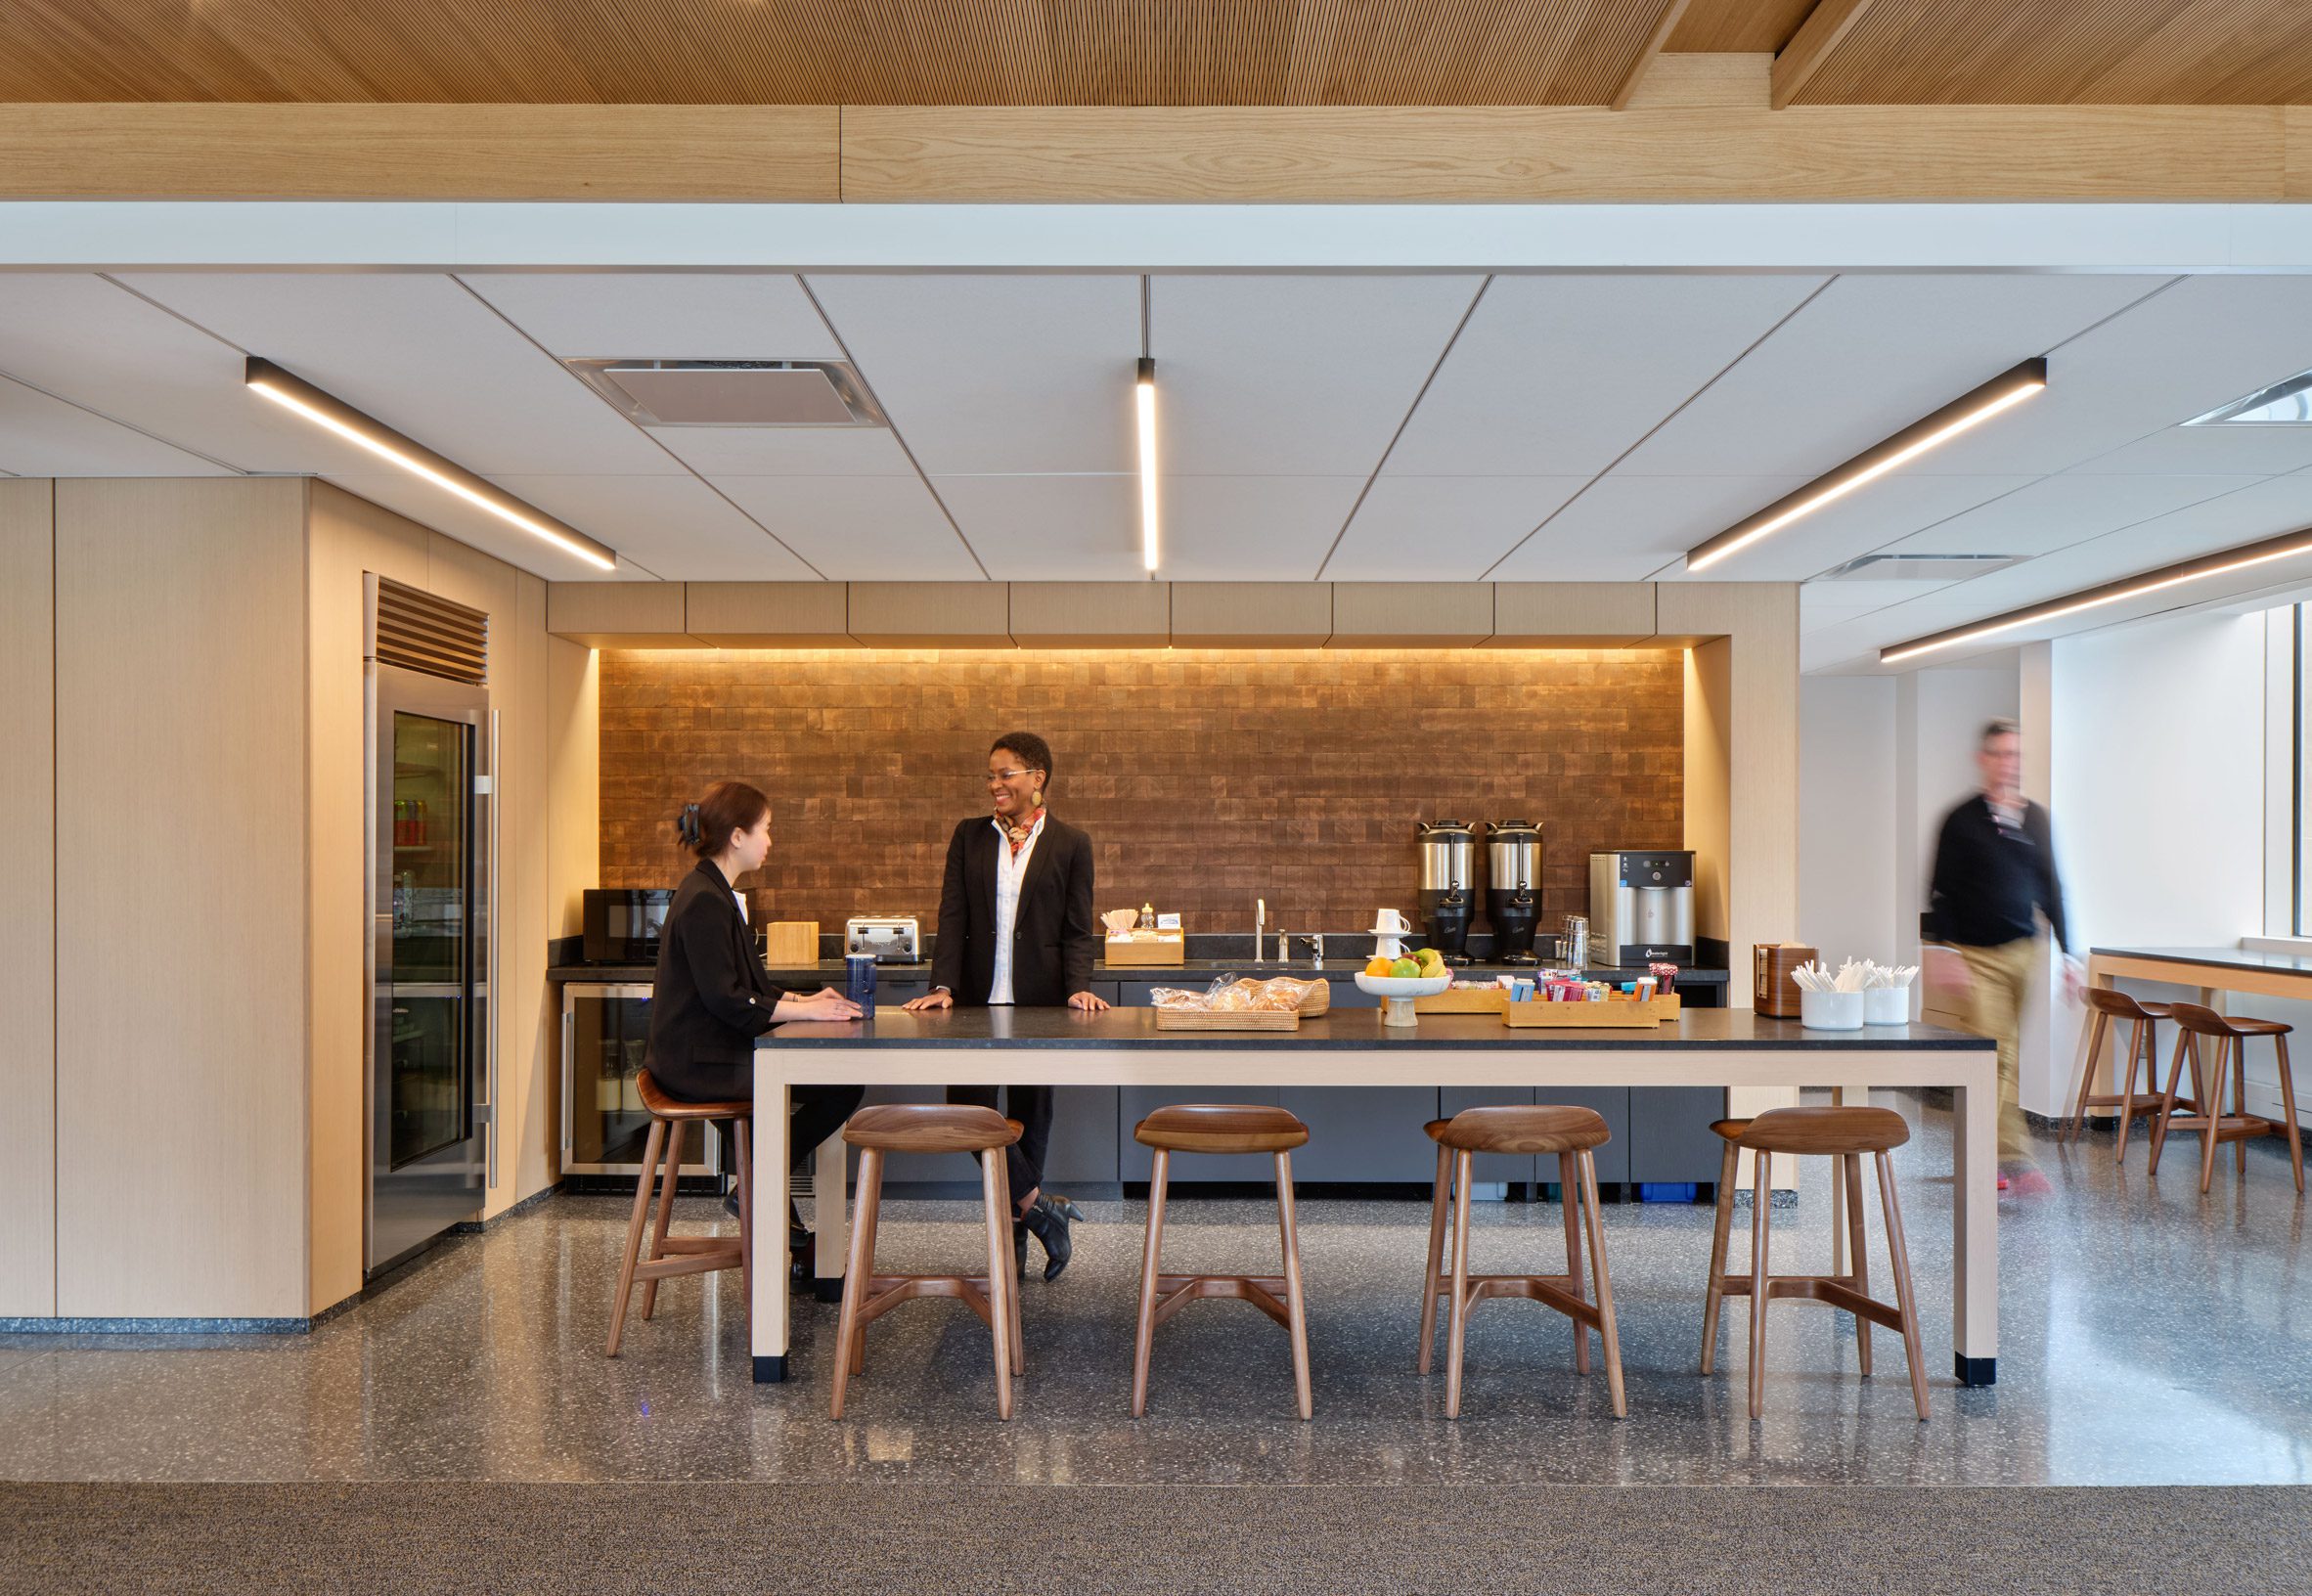 Open-plan kitchen island with terrazzo flooring underfoot